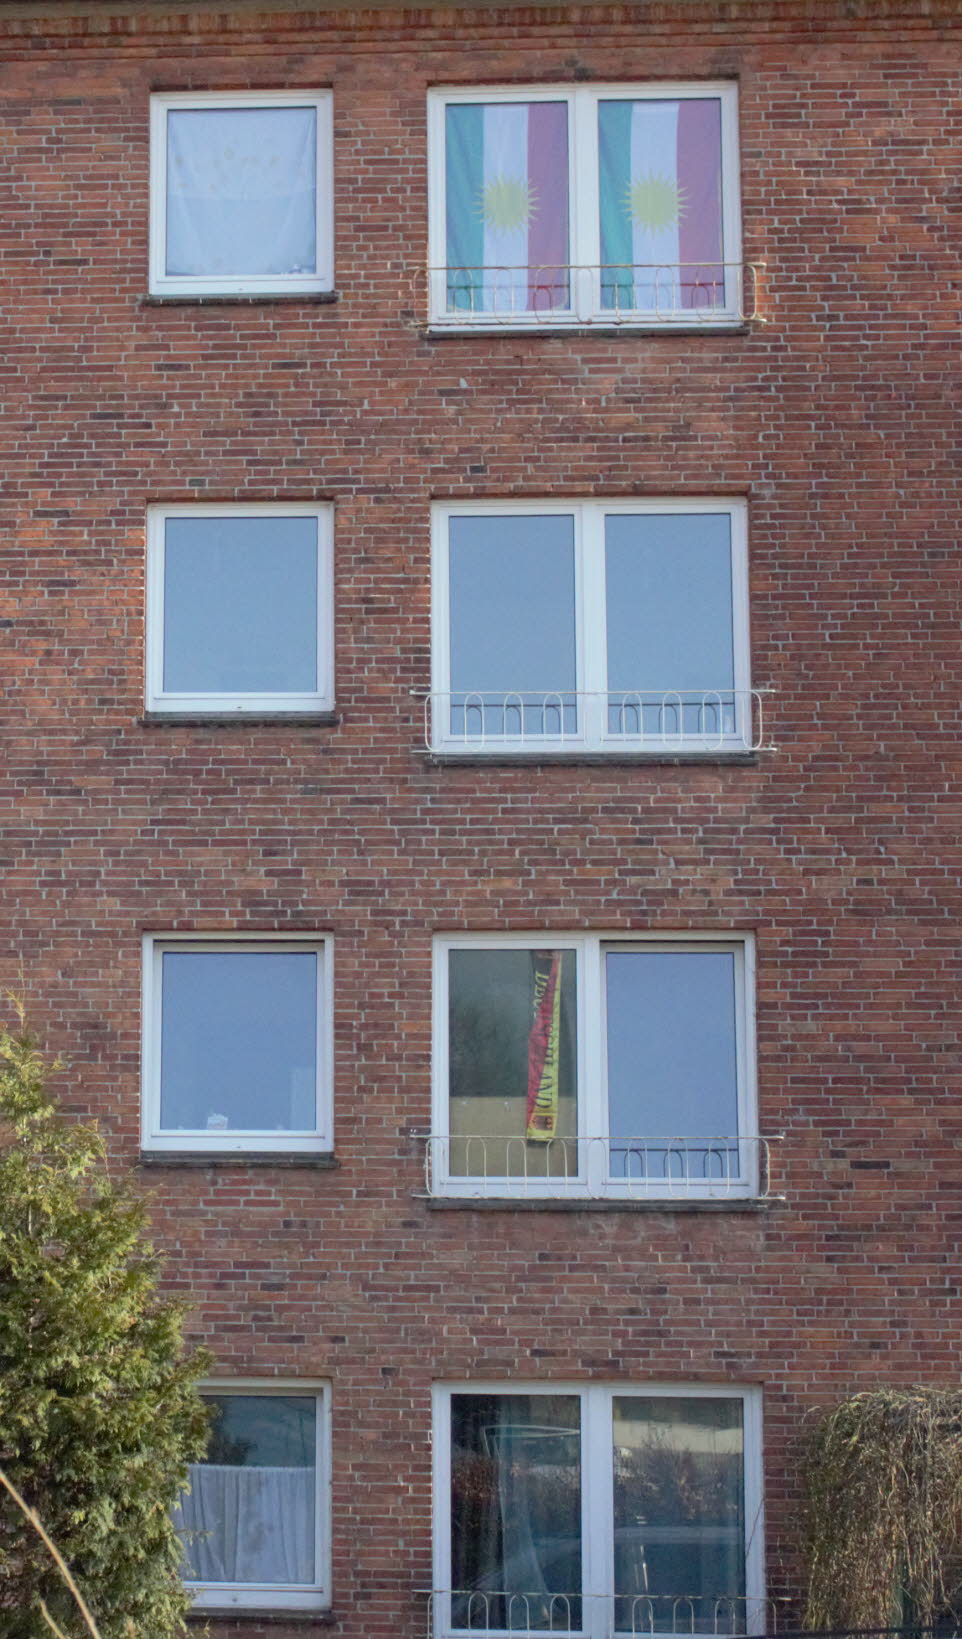 Fenster eines Mietshauses in Kiel